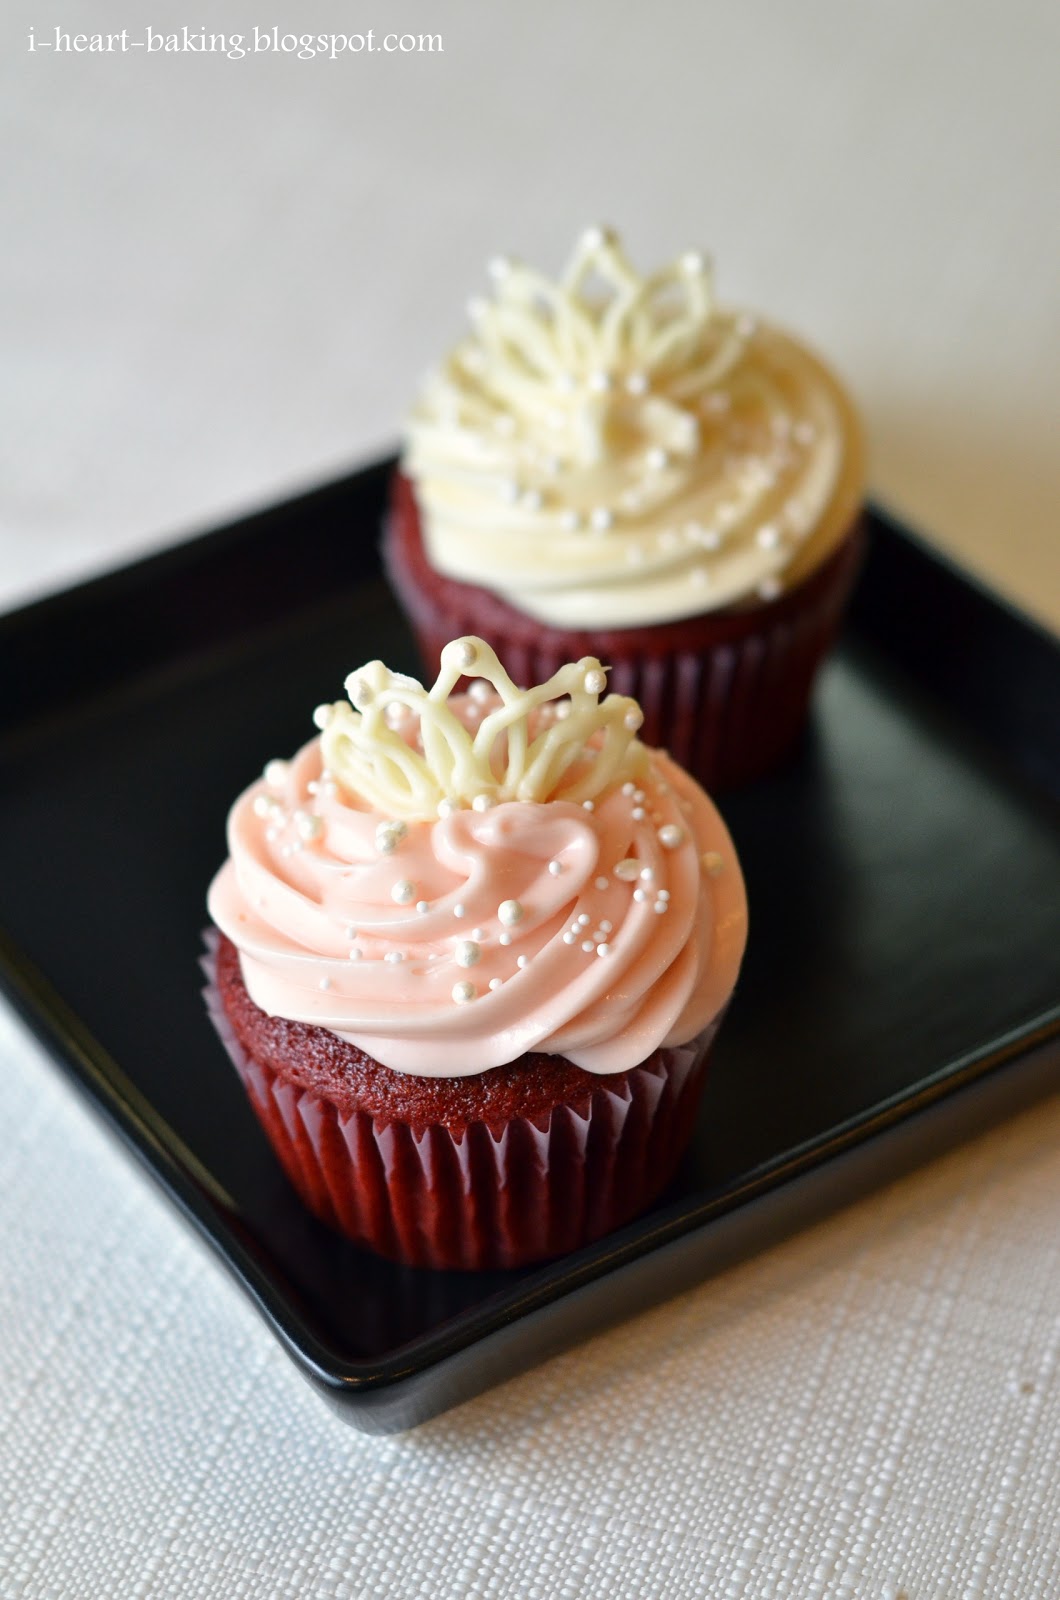 simple chocolate cake decorations white chocolate tiaras and red velvet cupcakes